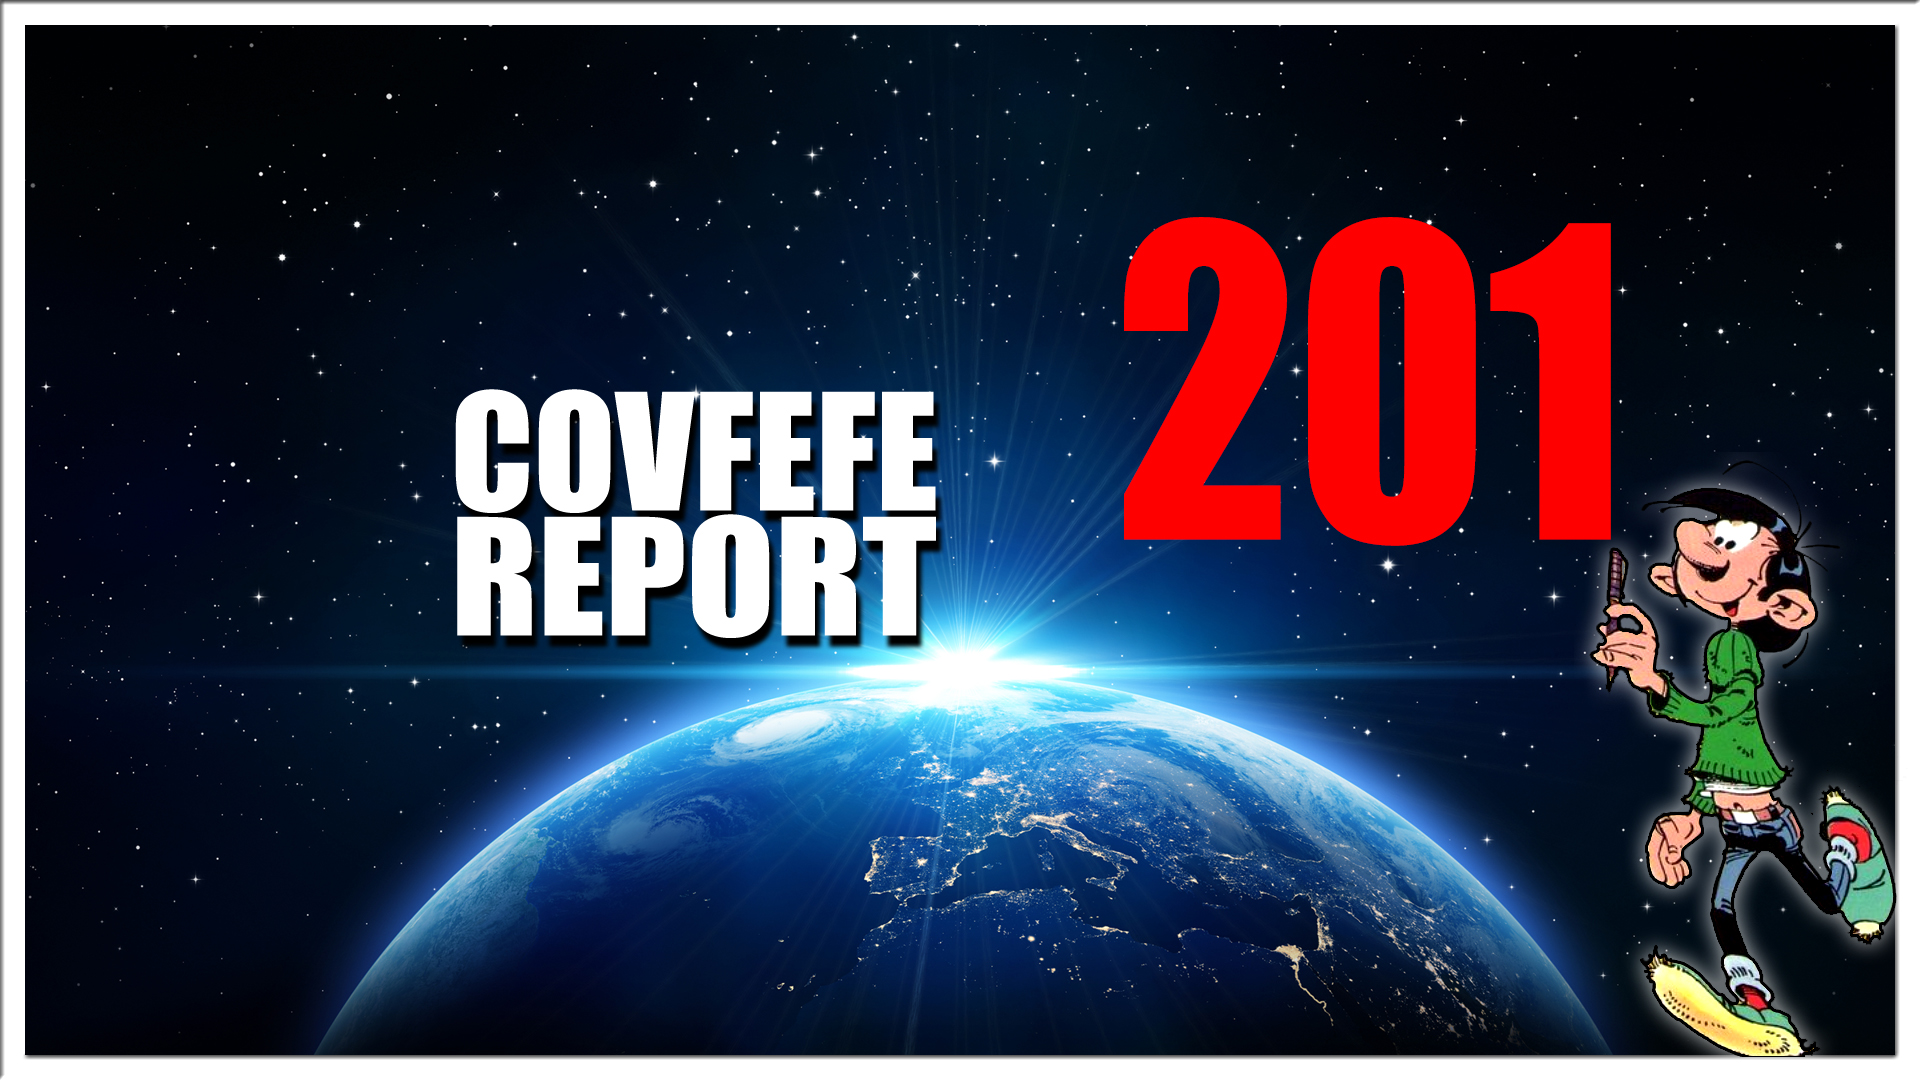 Covfefe Report 201. ngt